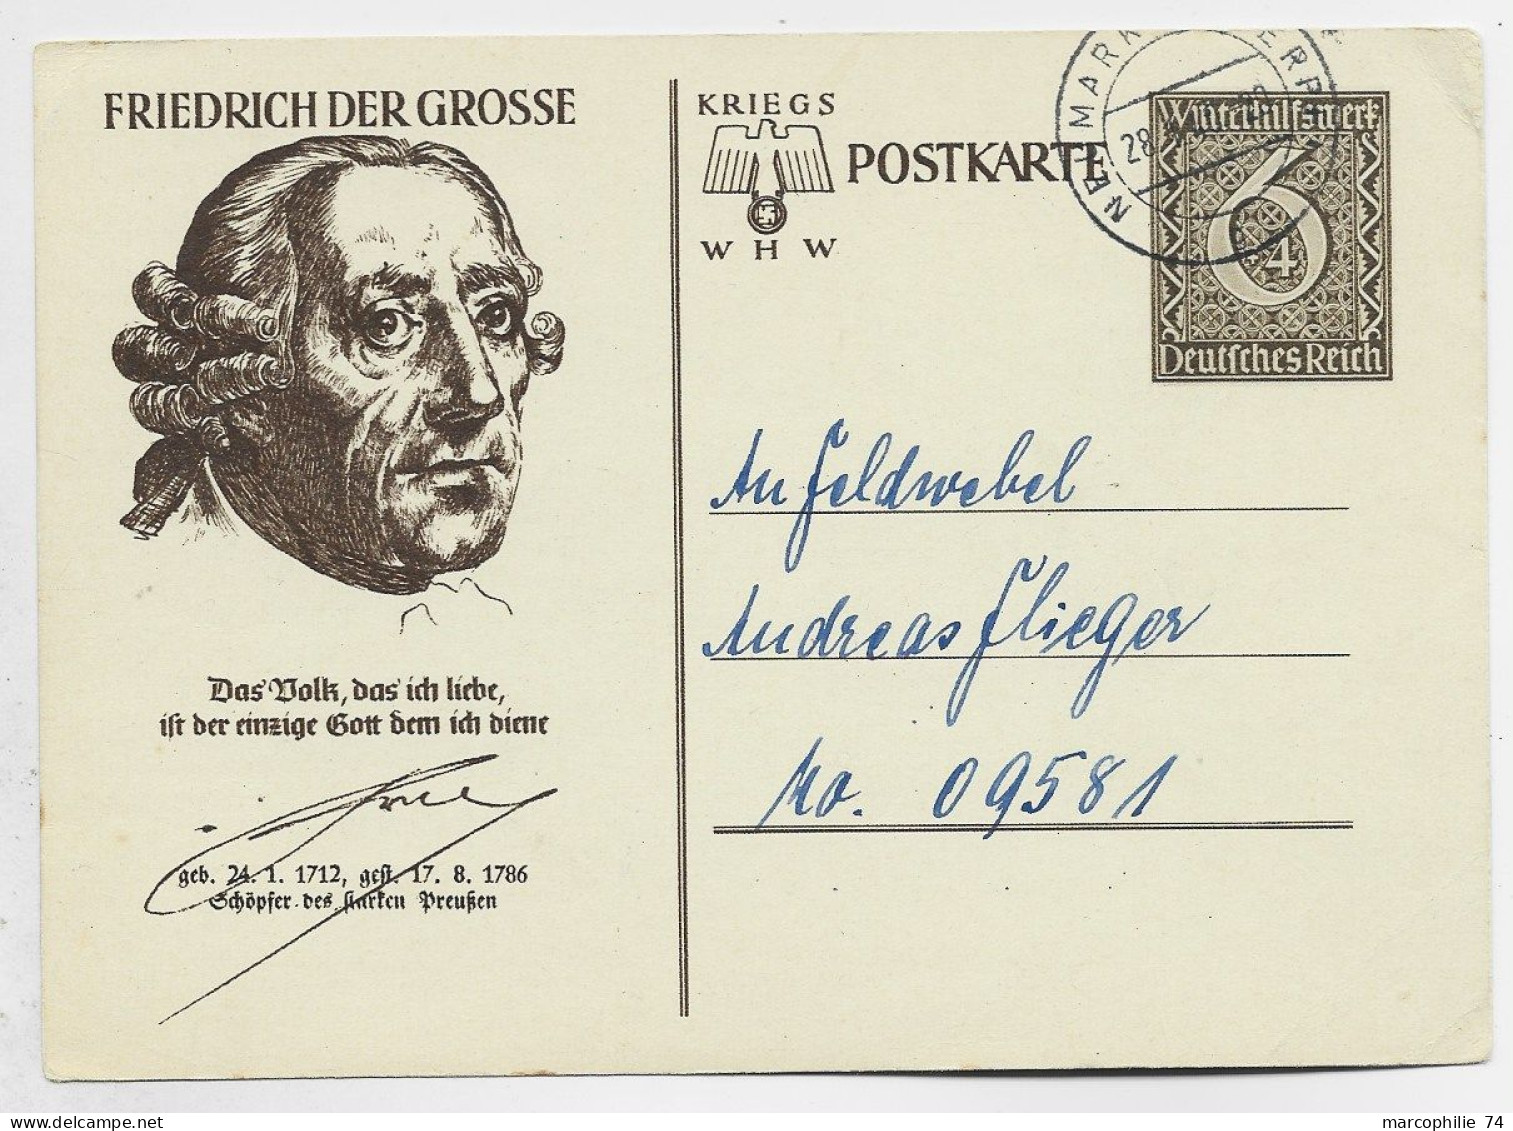 GERMANY REICH ENTIER 6C POSTKARTE FRIEDRICH GROSSE 28.1.1940 TO N°09581 - Cartoline